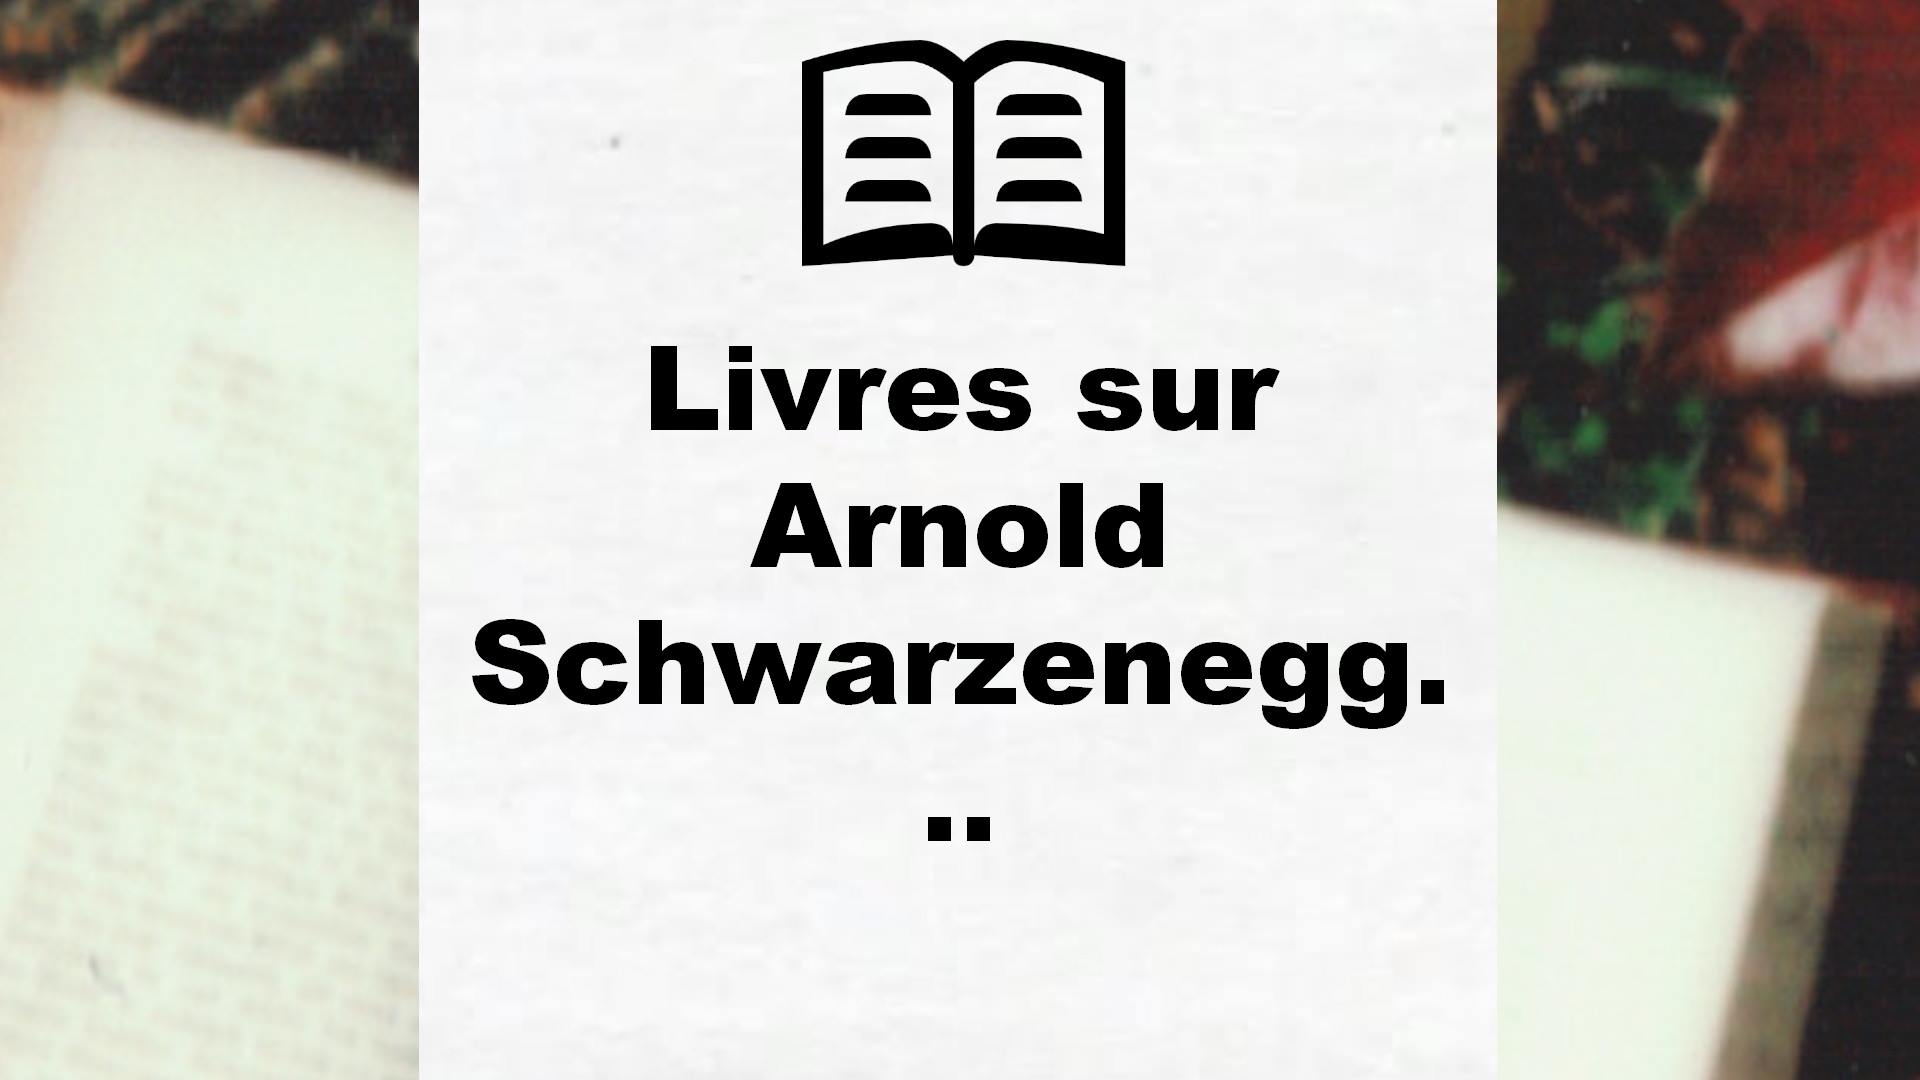 Livres sur Arnold Schwarzenegger